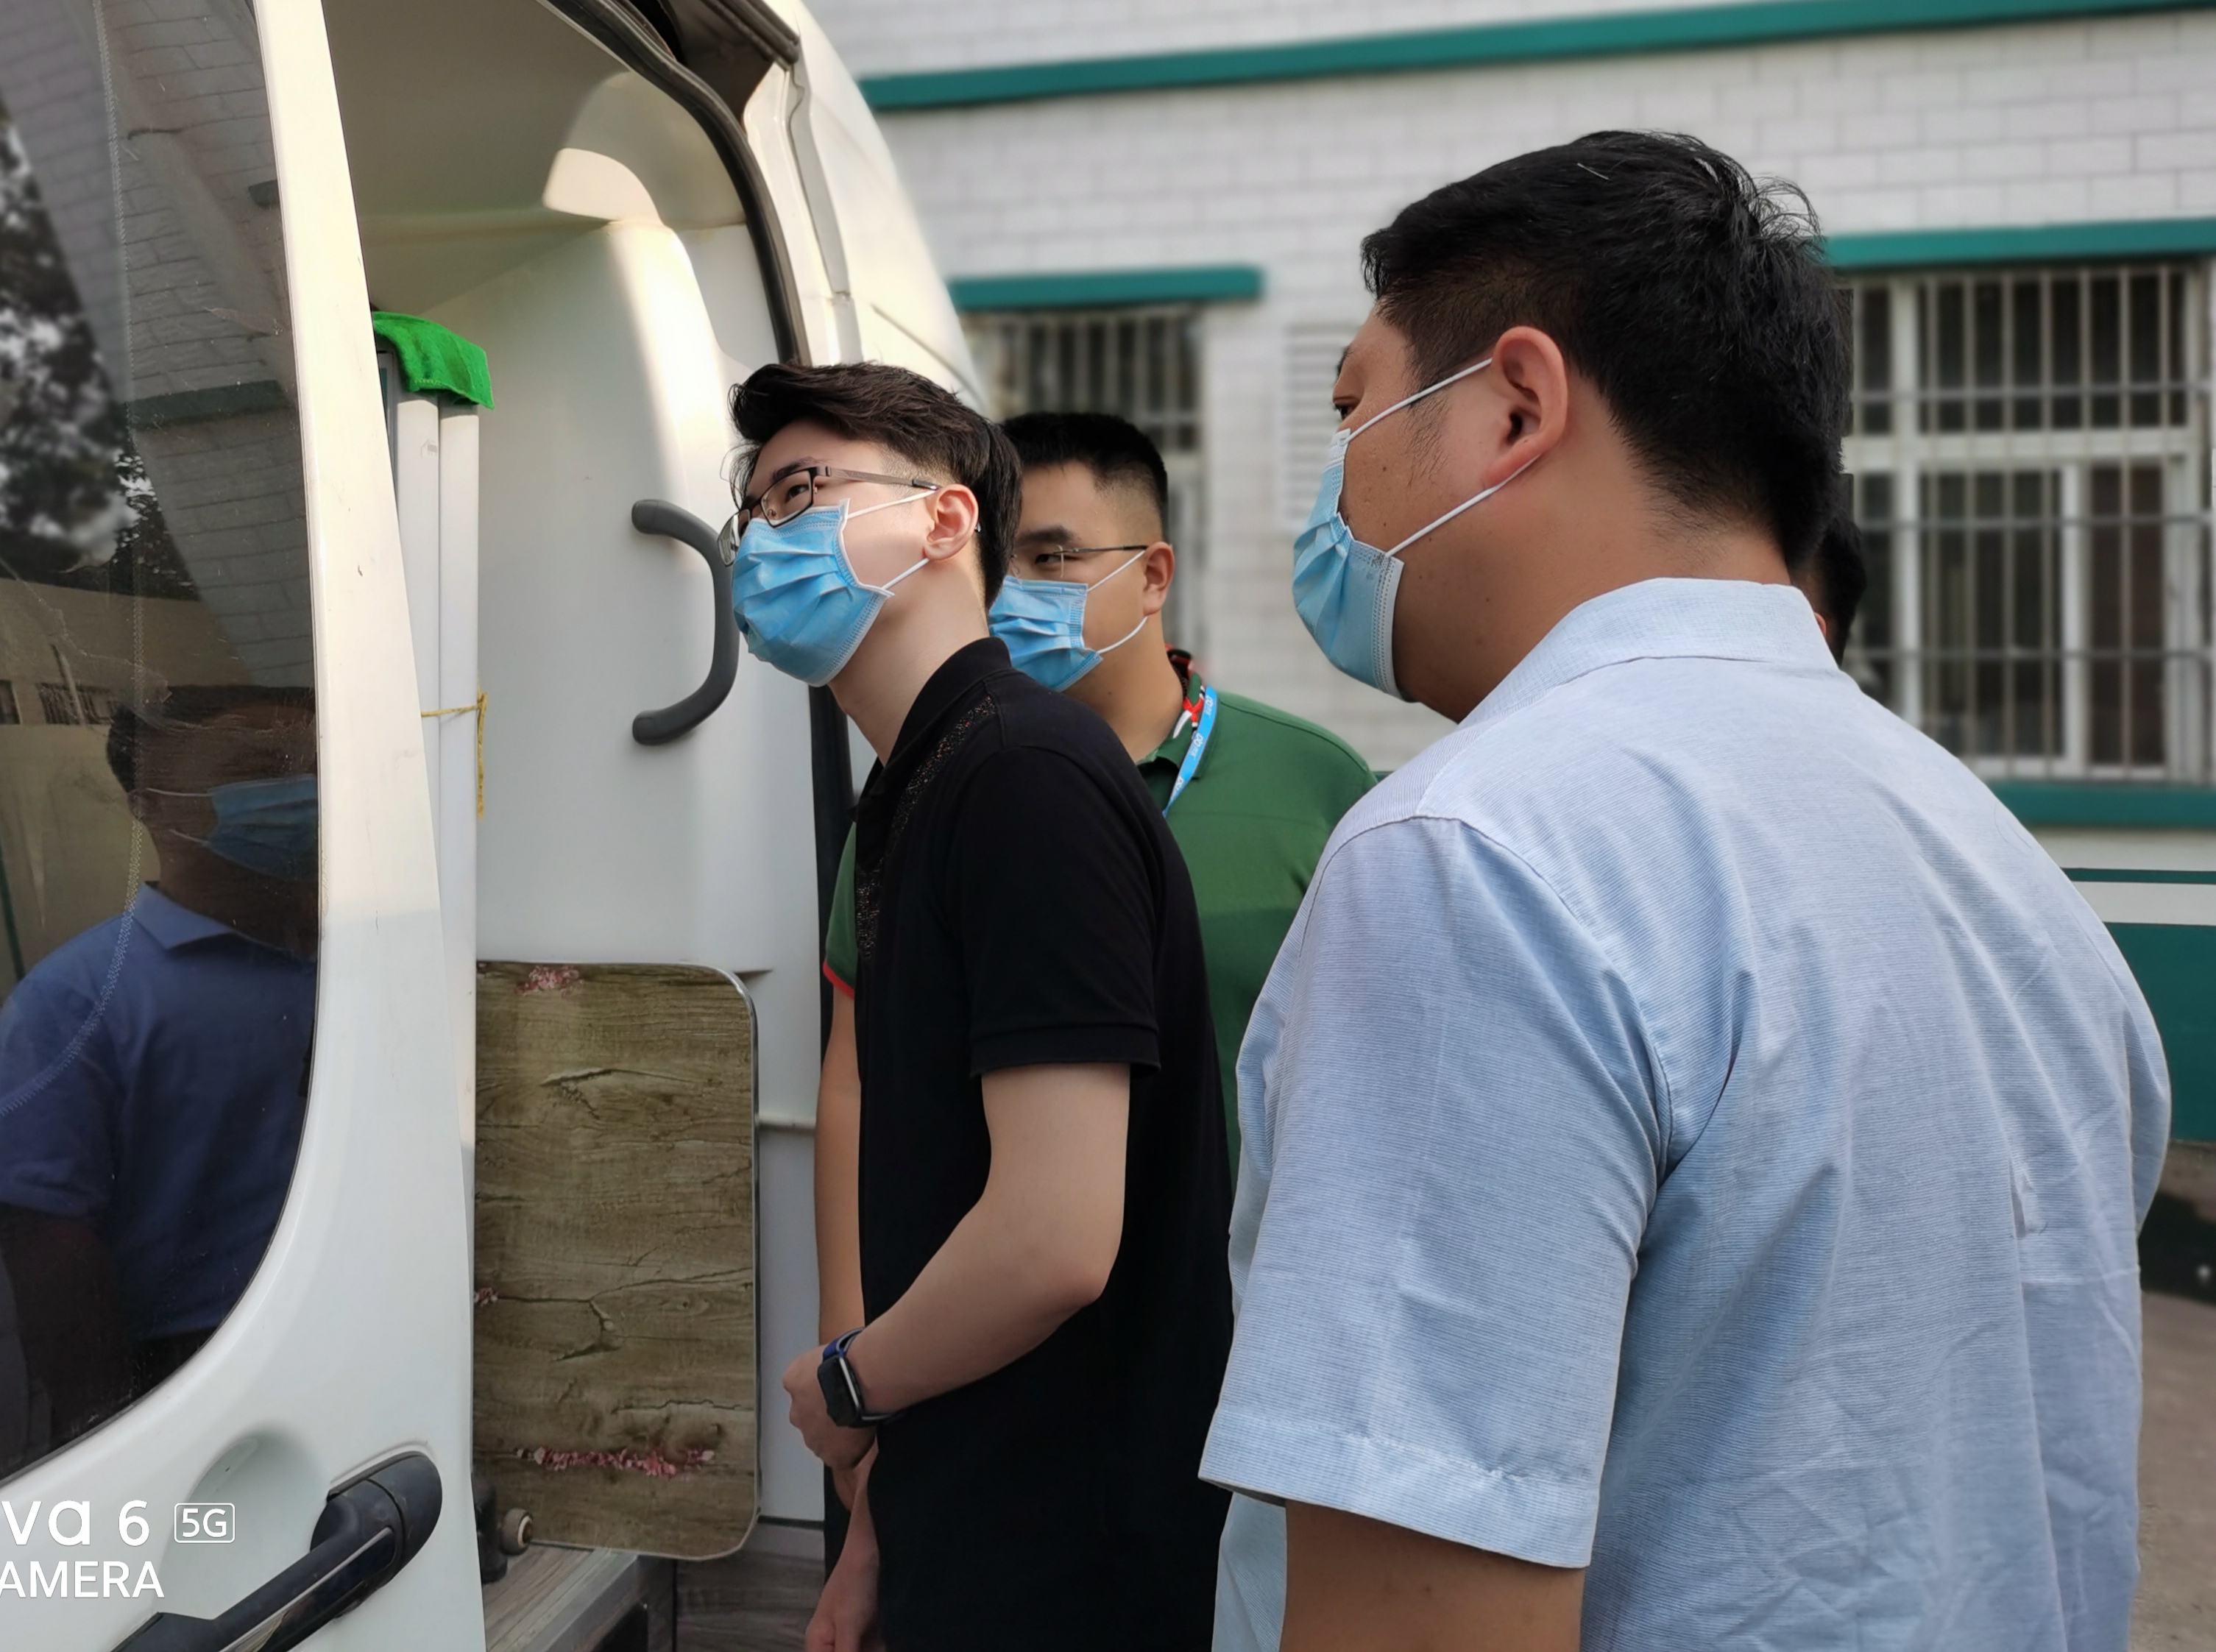 Liu and colleagues inspect "mobile hospital" unit